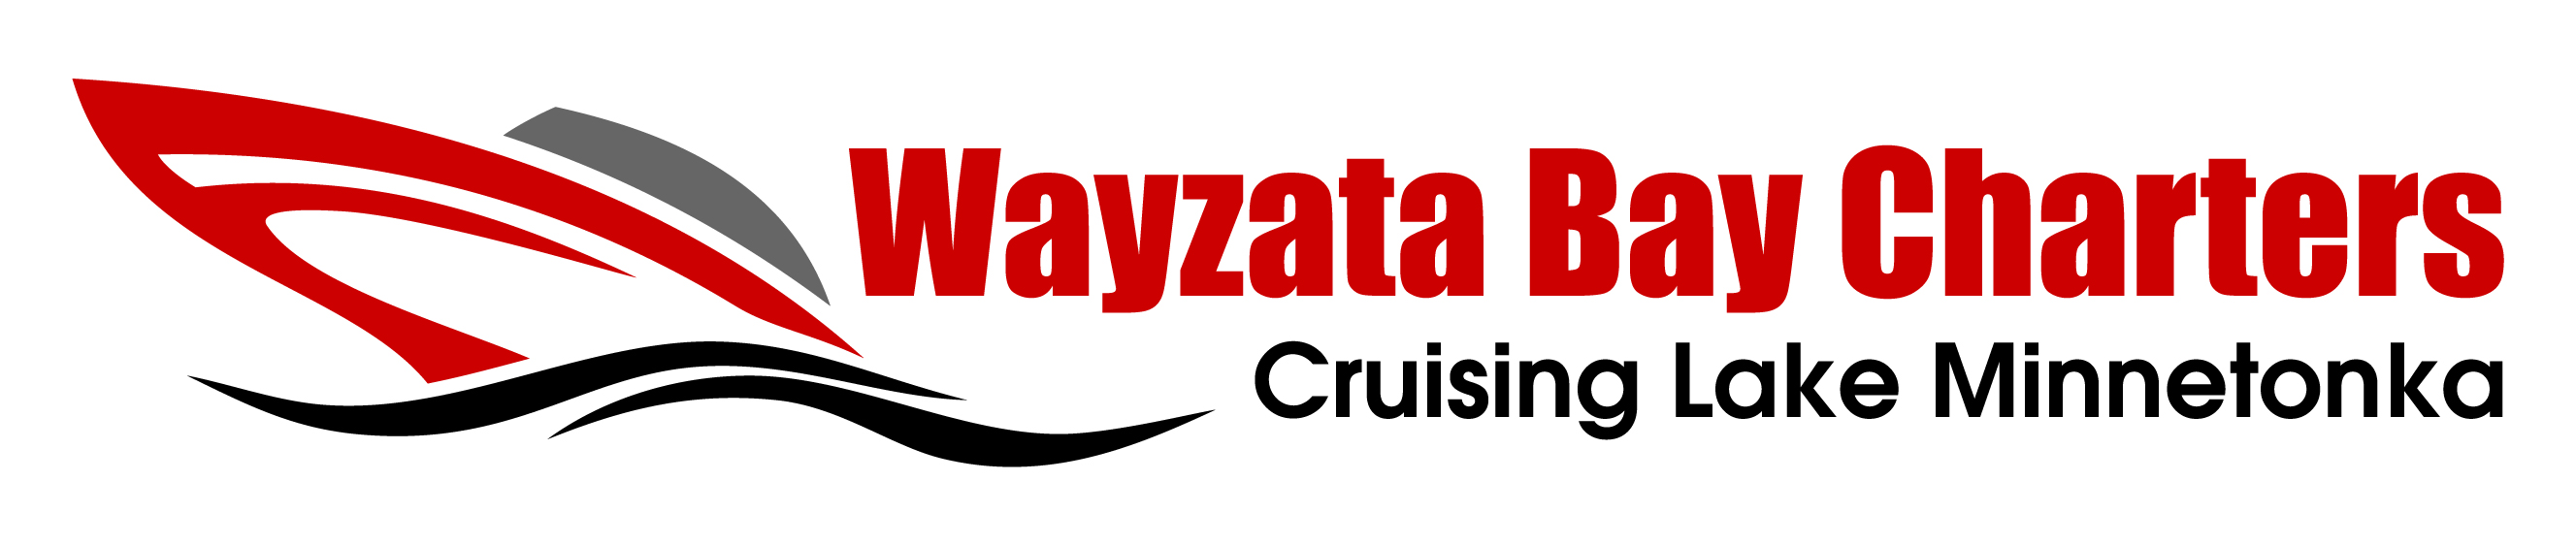 WayzataBay Charters